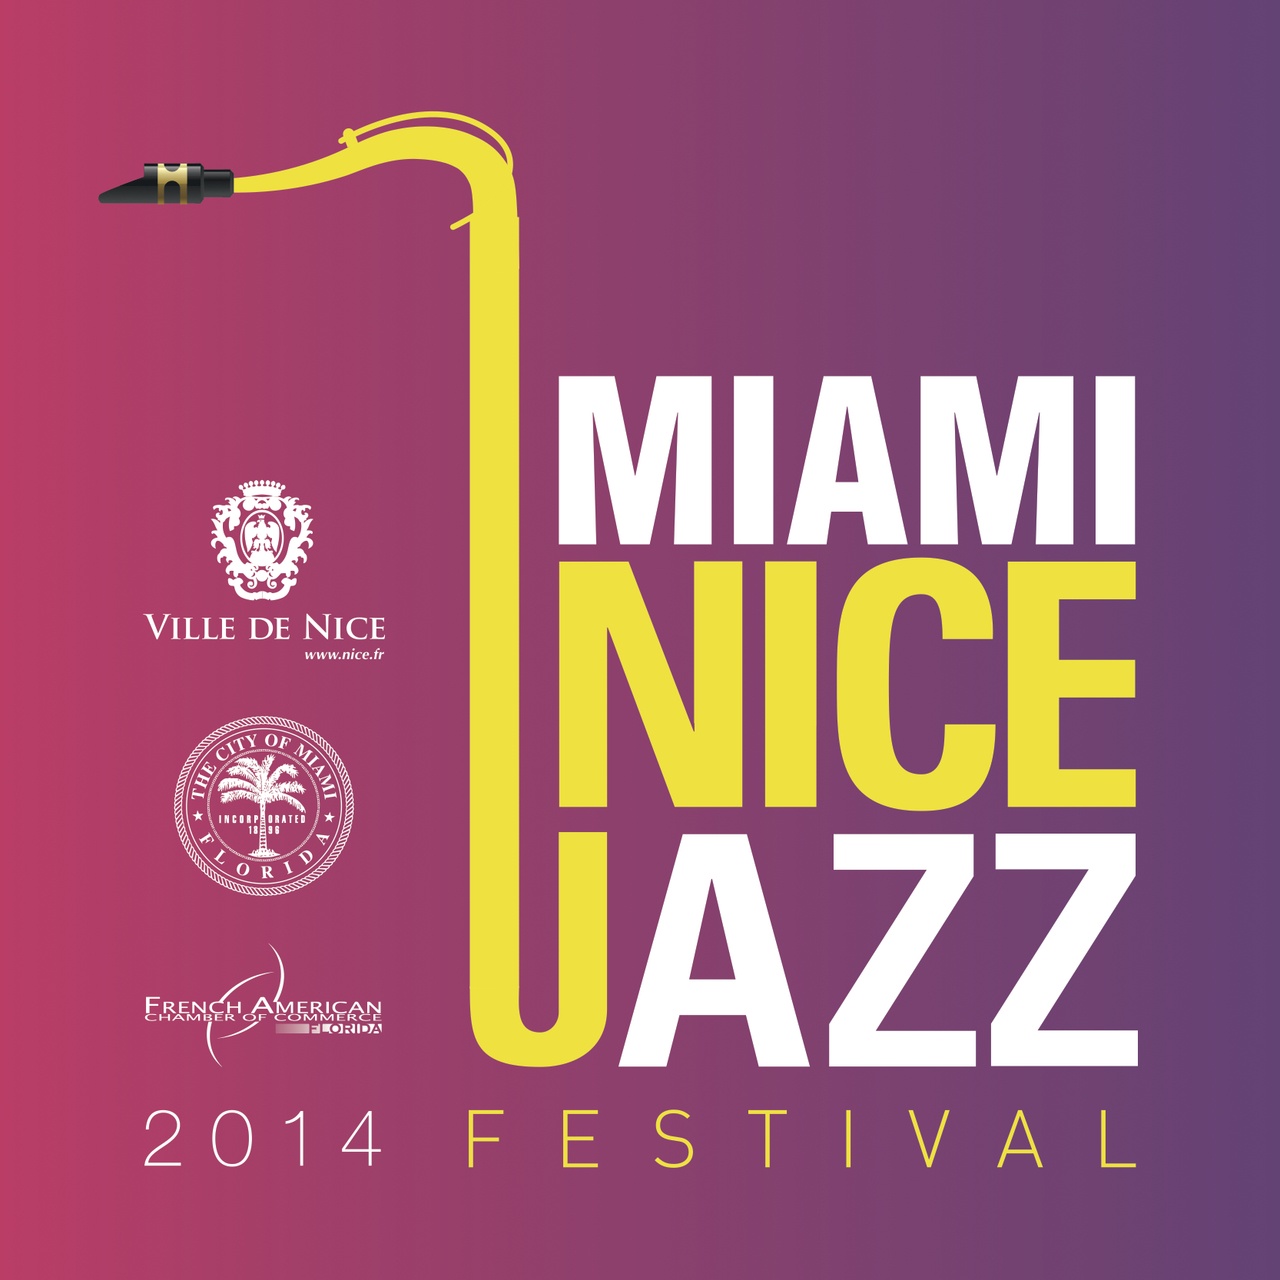 Miami - Nice jazz festival 2014